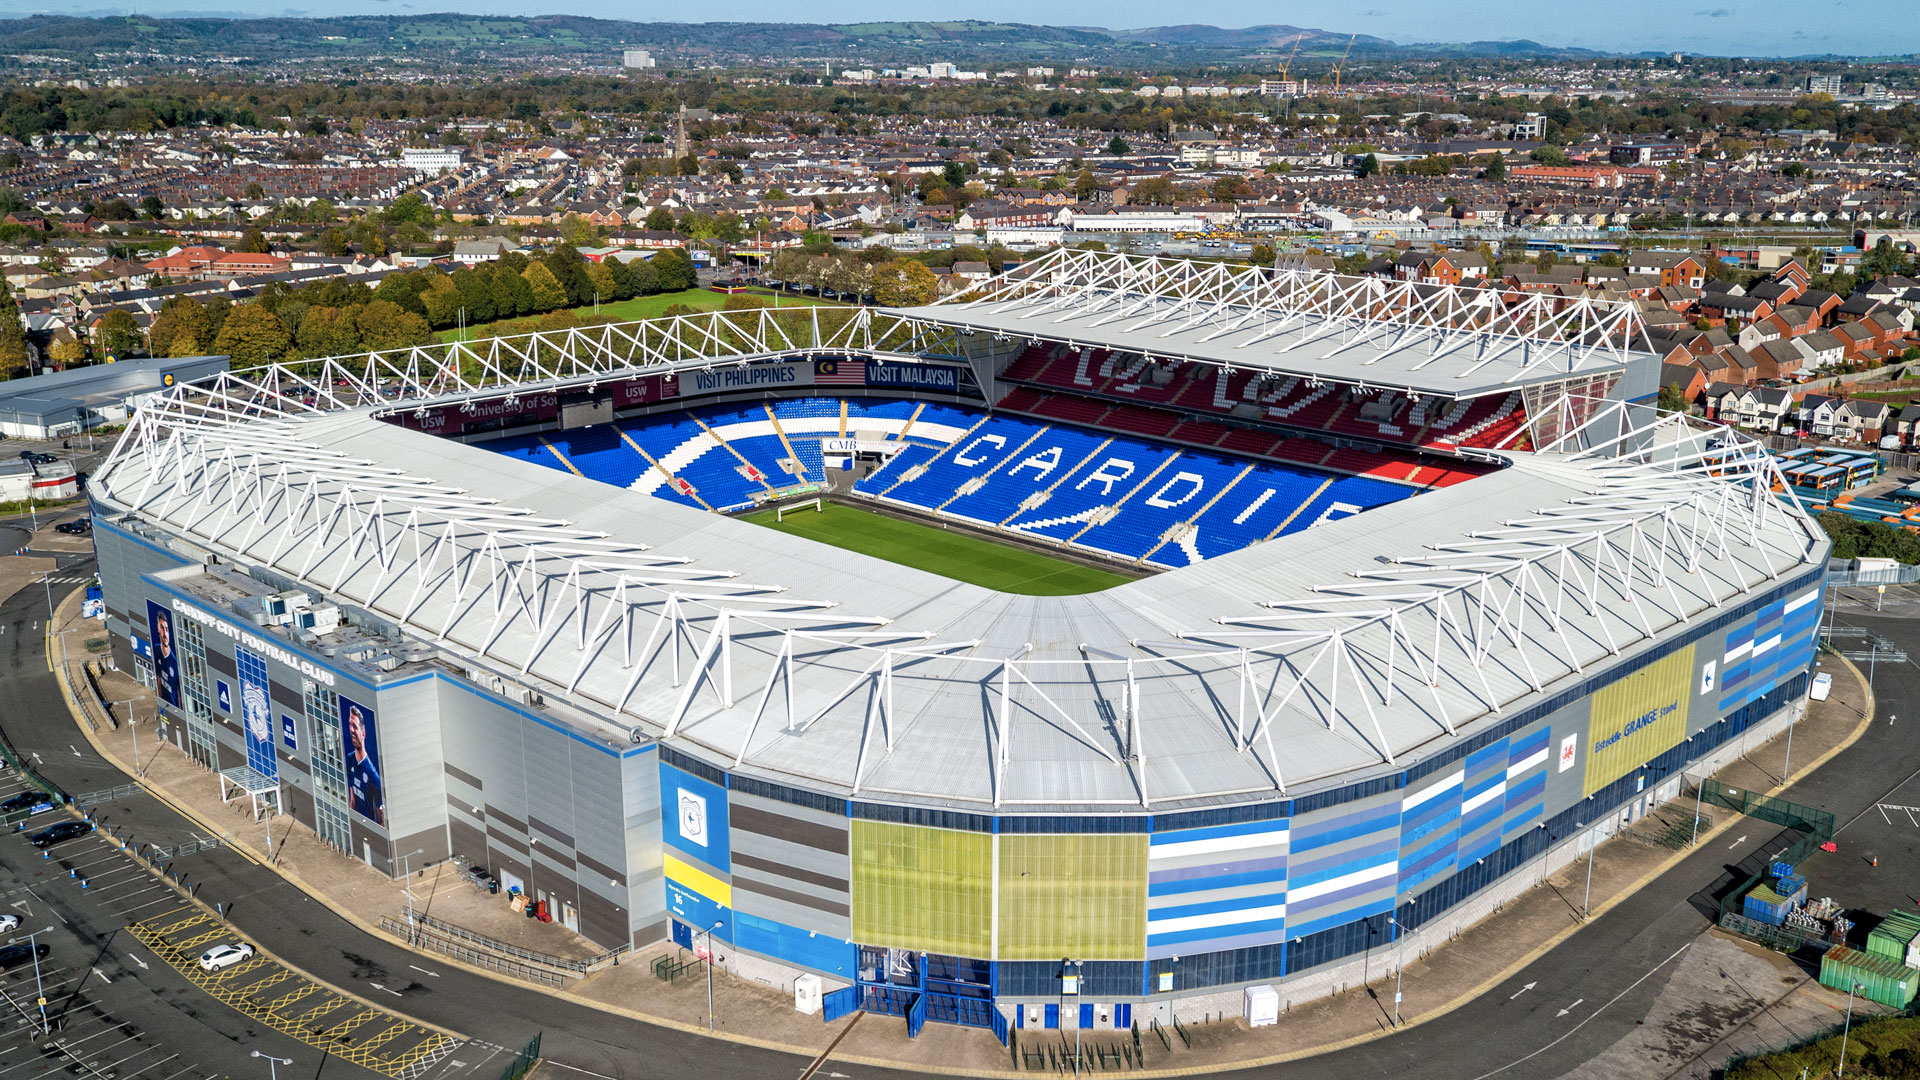 Cardiff City Stadium from the sky...